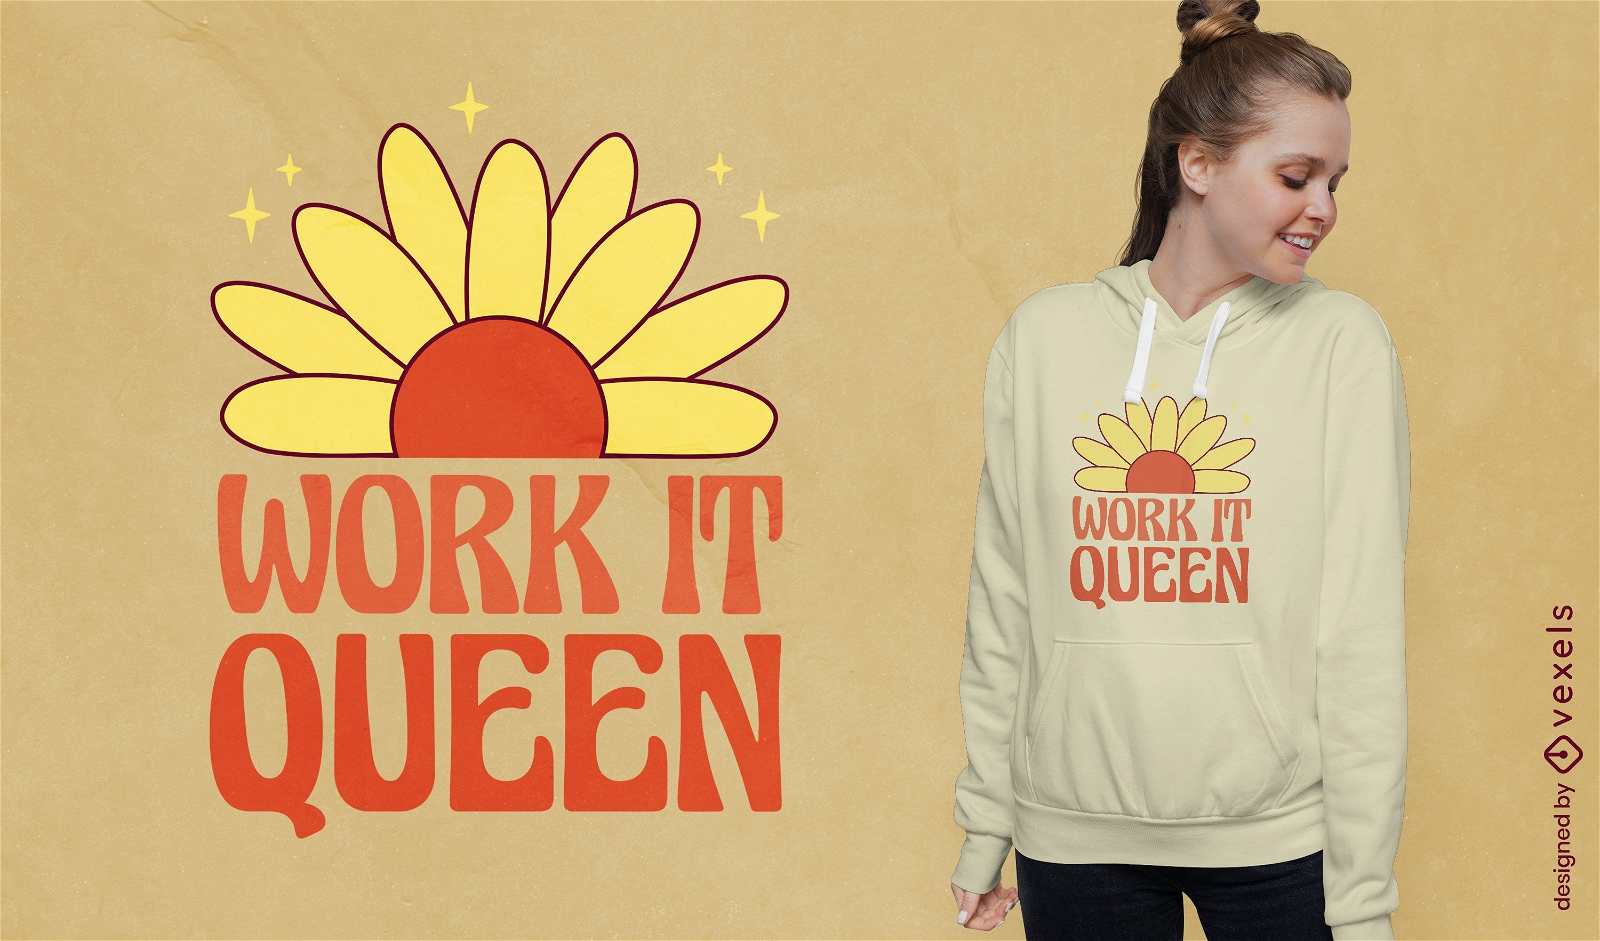 Work it queen feminist quote t-shirt design